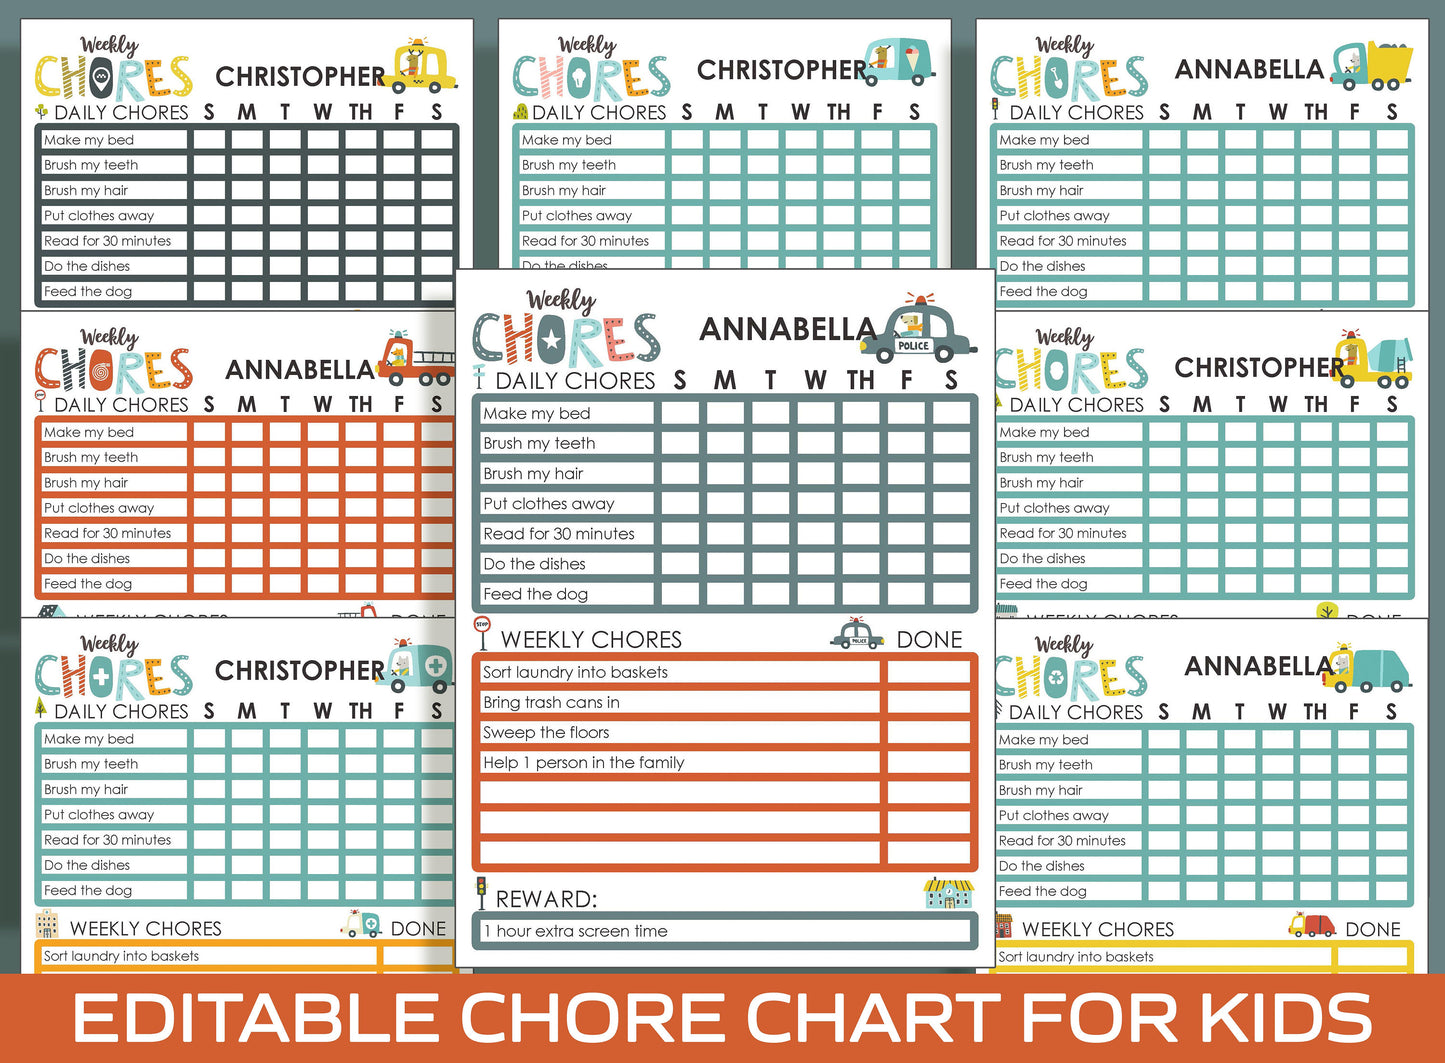 Chore Chart for Kids - Car, Printable/Editable Chore Chart for Kids, Responsibility, Boys/Girls To Do List, Reward Chart/Routine